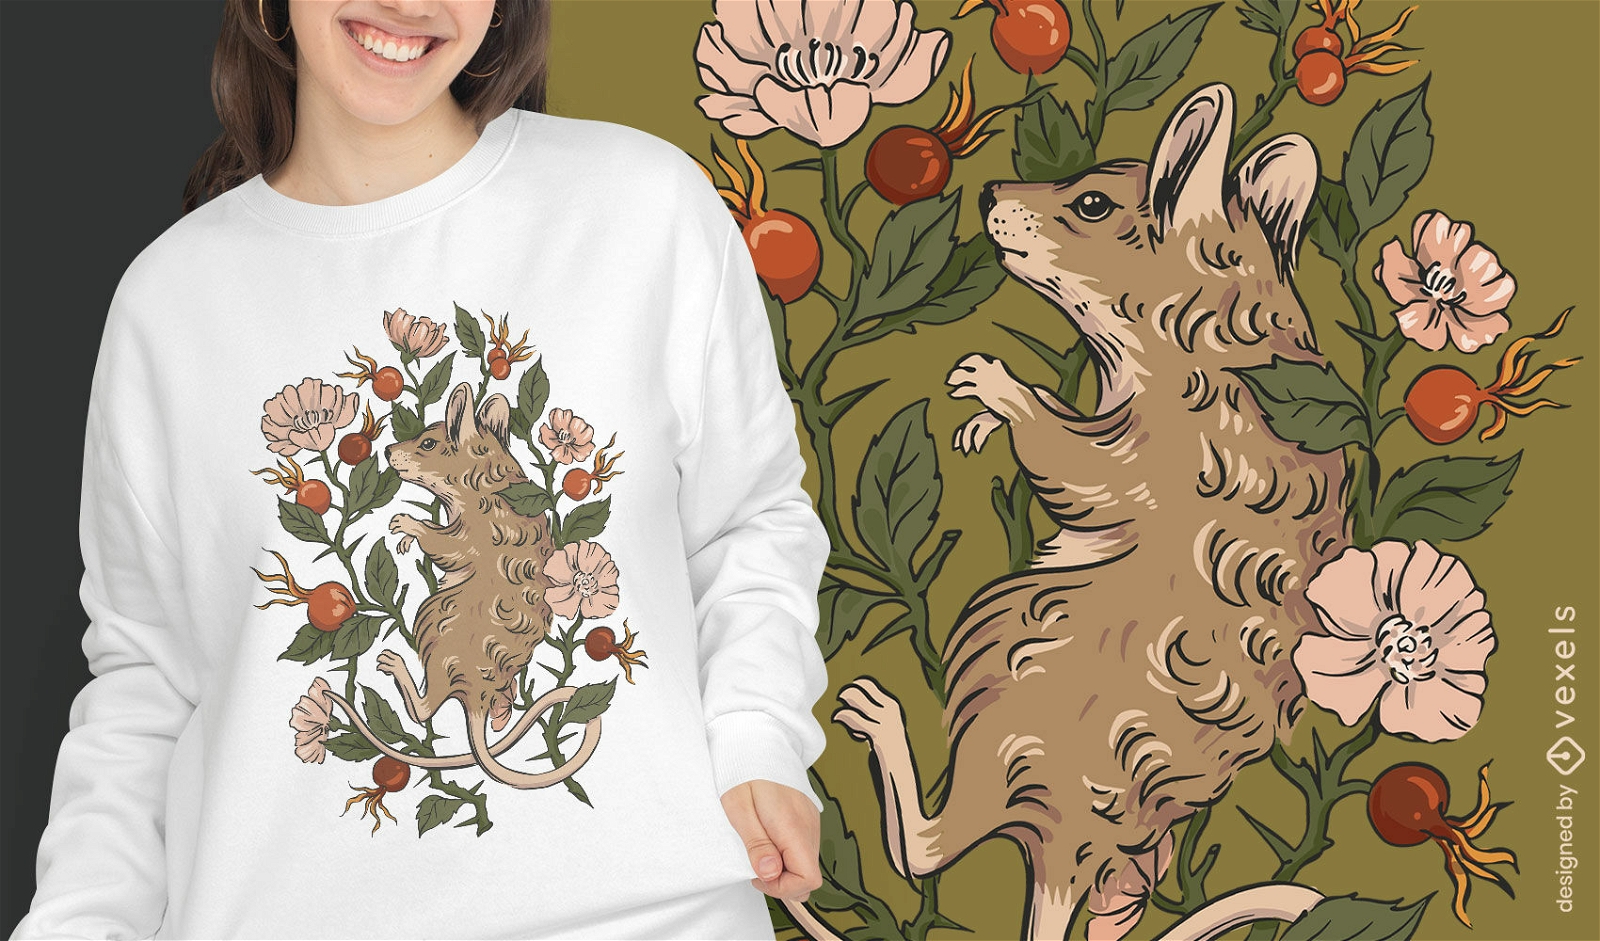 Diseño de camiseta floral de ratón de campo.